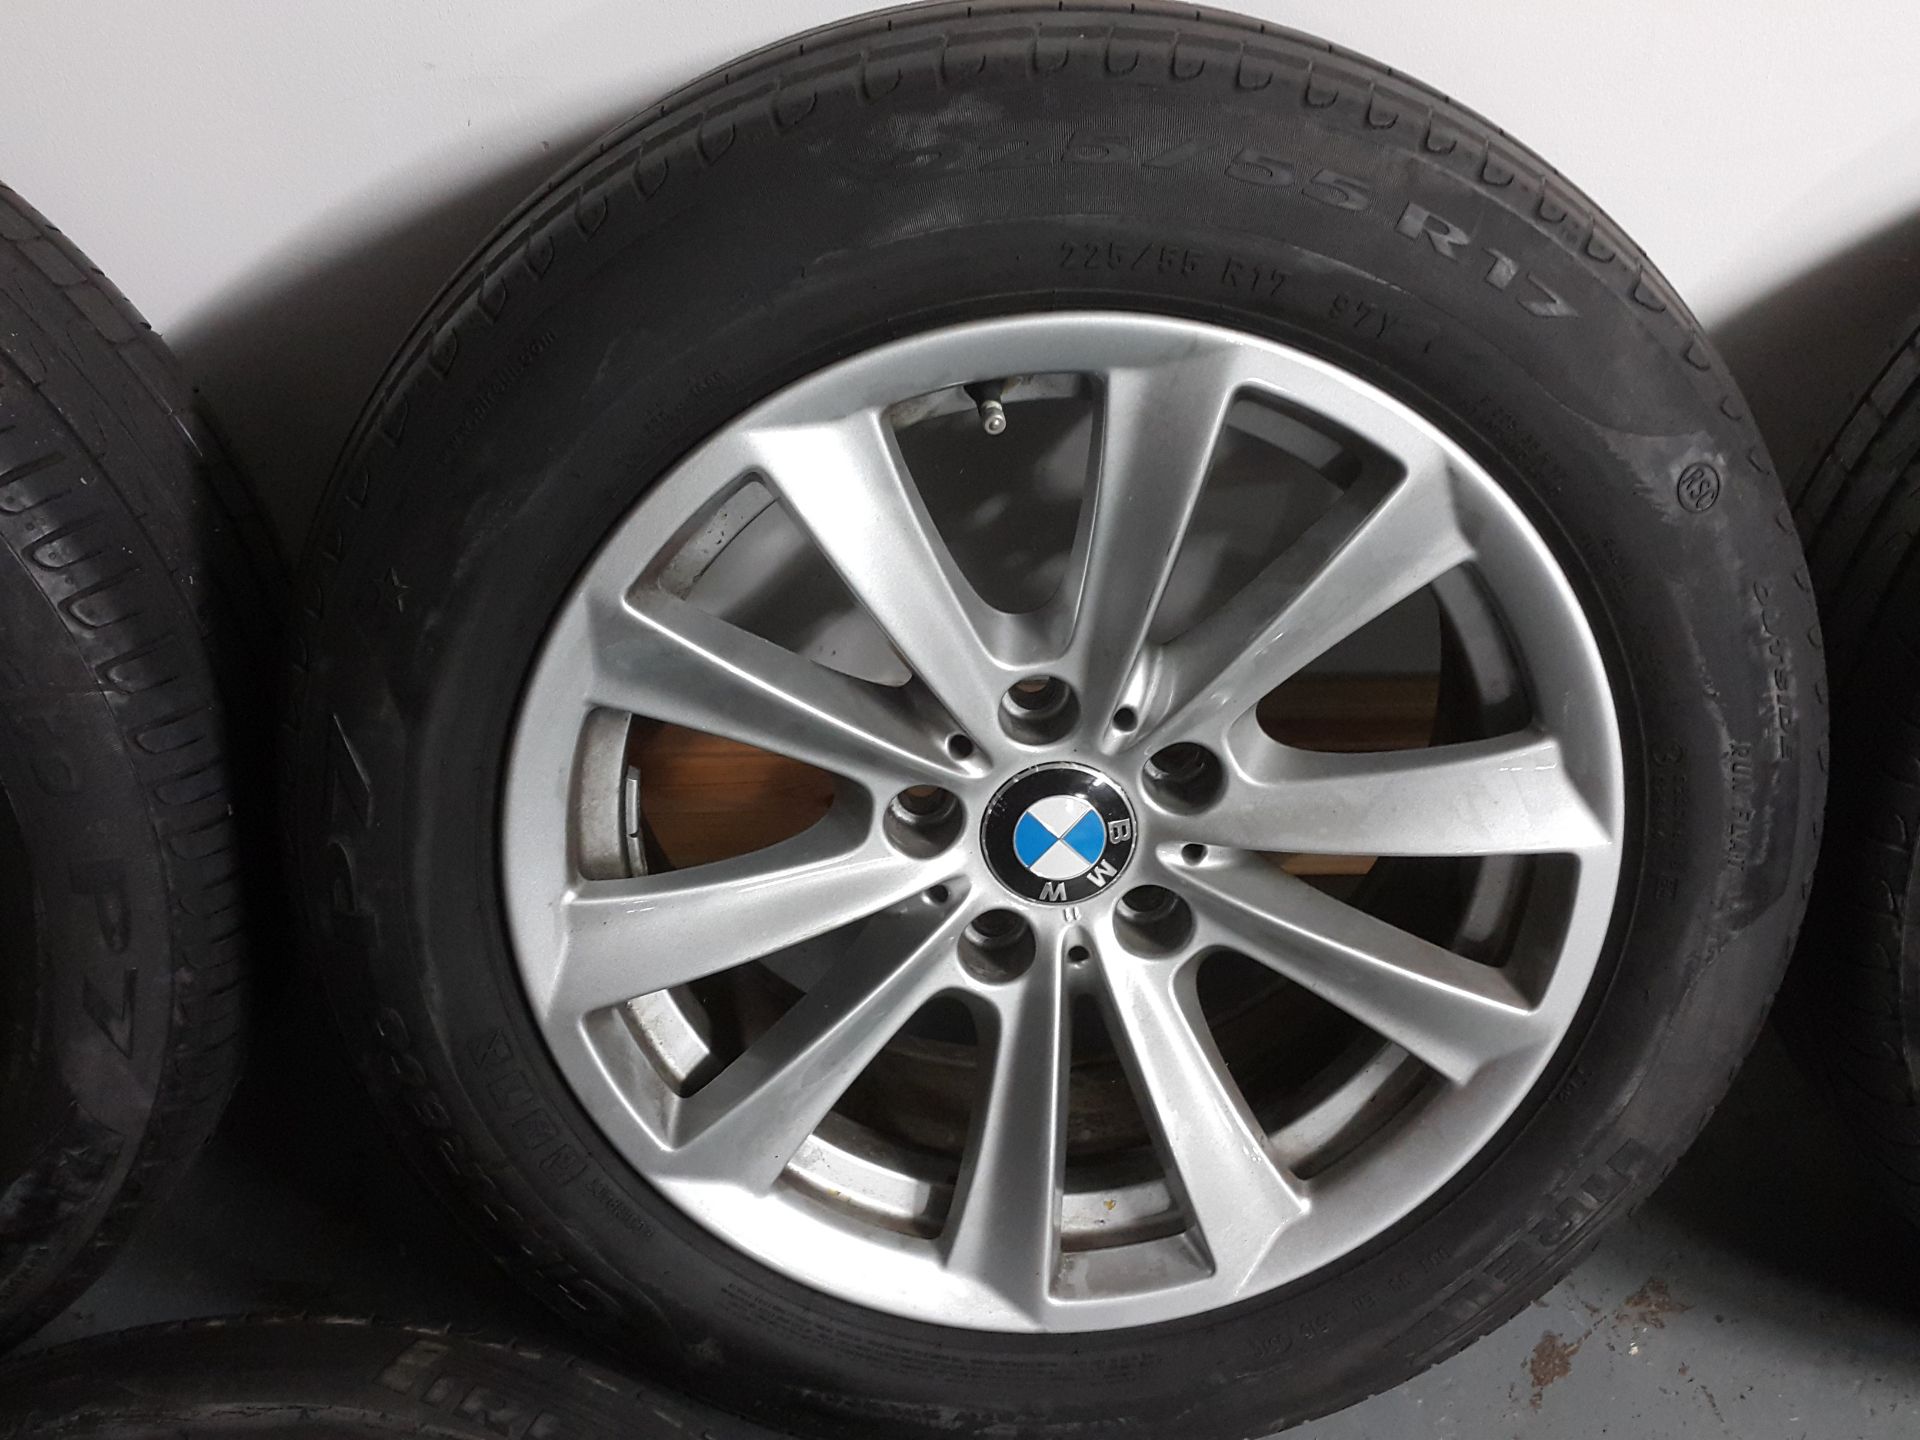 4 X BMW 5 SERIES 17" ALLOY WHEELS WITH PIRELLI CINTURATO RUN FLAT TYRES 225/55/R17 - Image 4 of 9